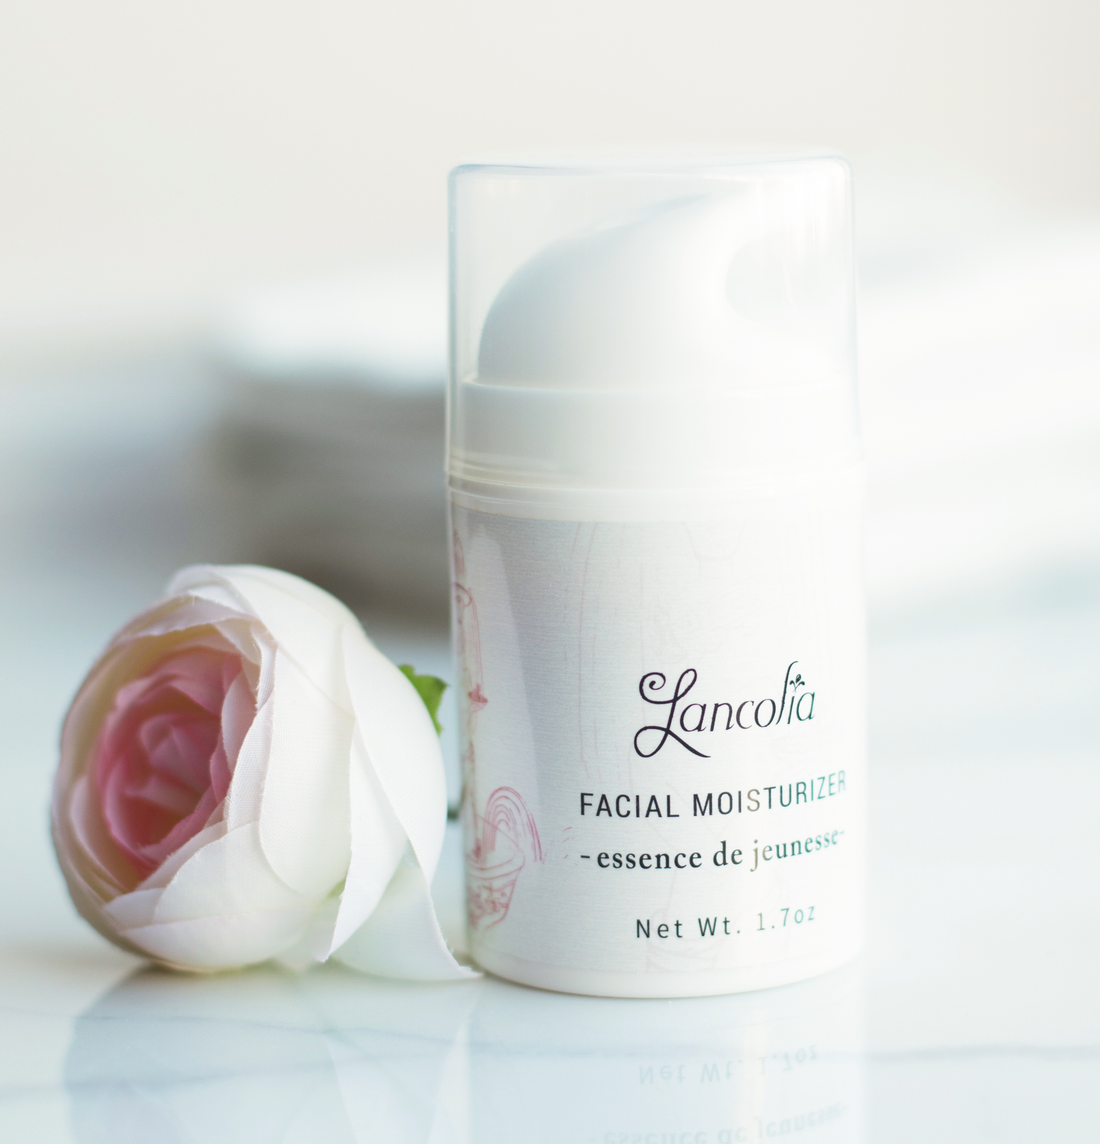 Introducing Lancolia’s best-selling facial moisturizer and anti-aging cream: “Essence de Jeunesse”